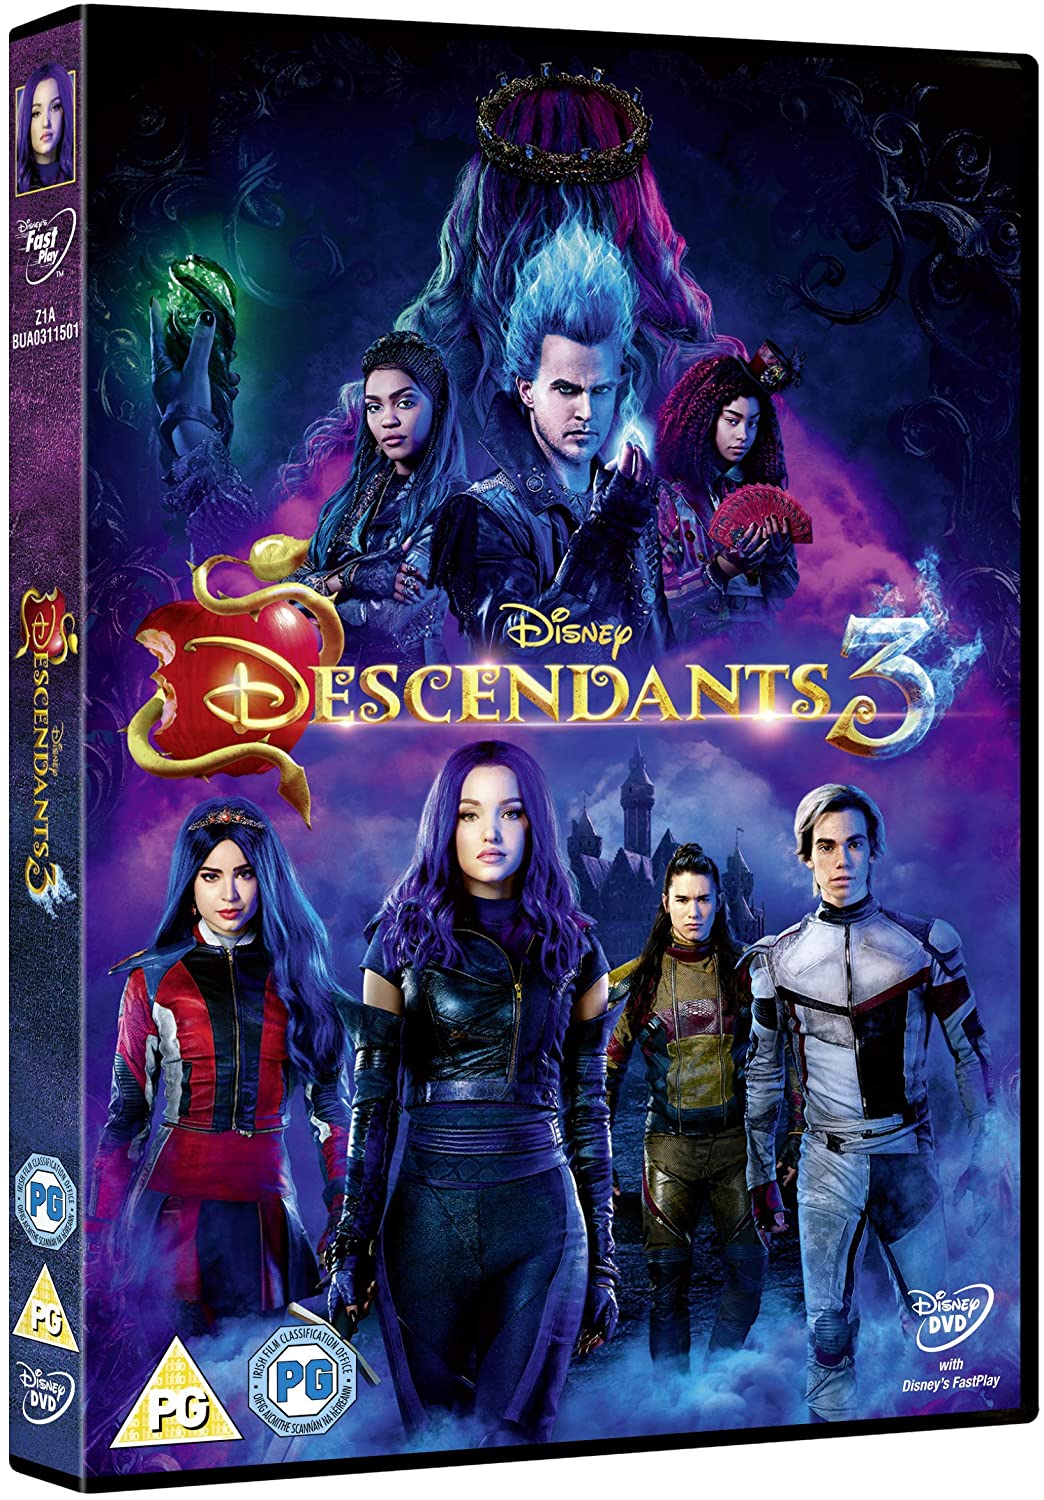 Disney Descendants 3 [2019] – Fantasy [DVD]